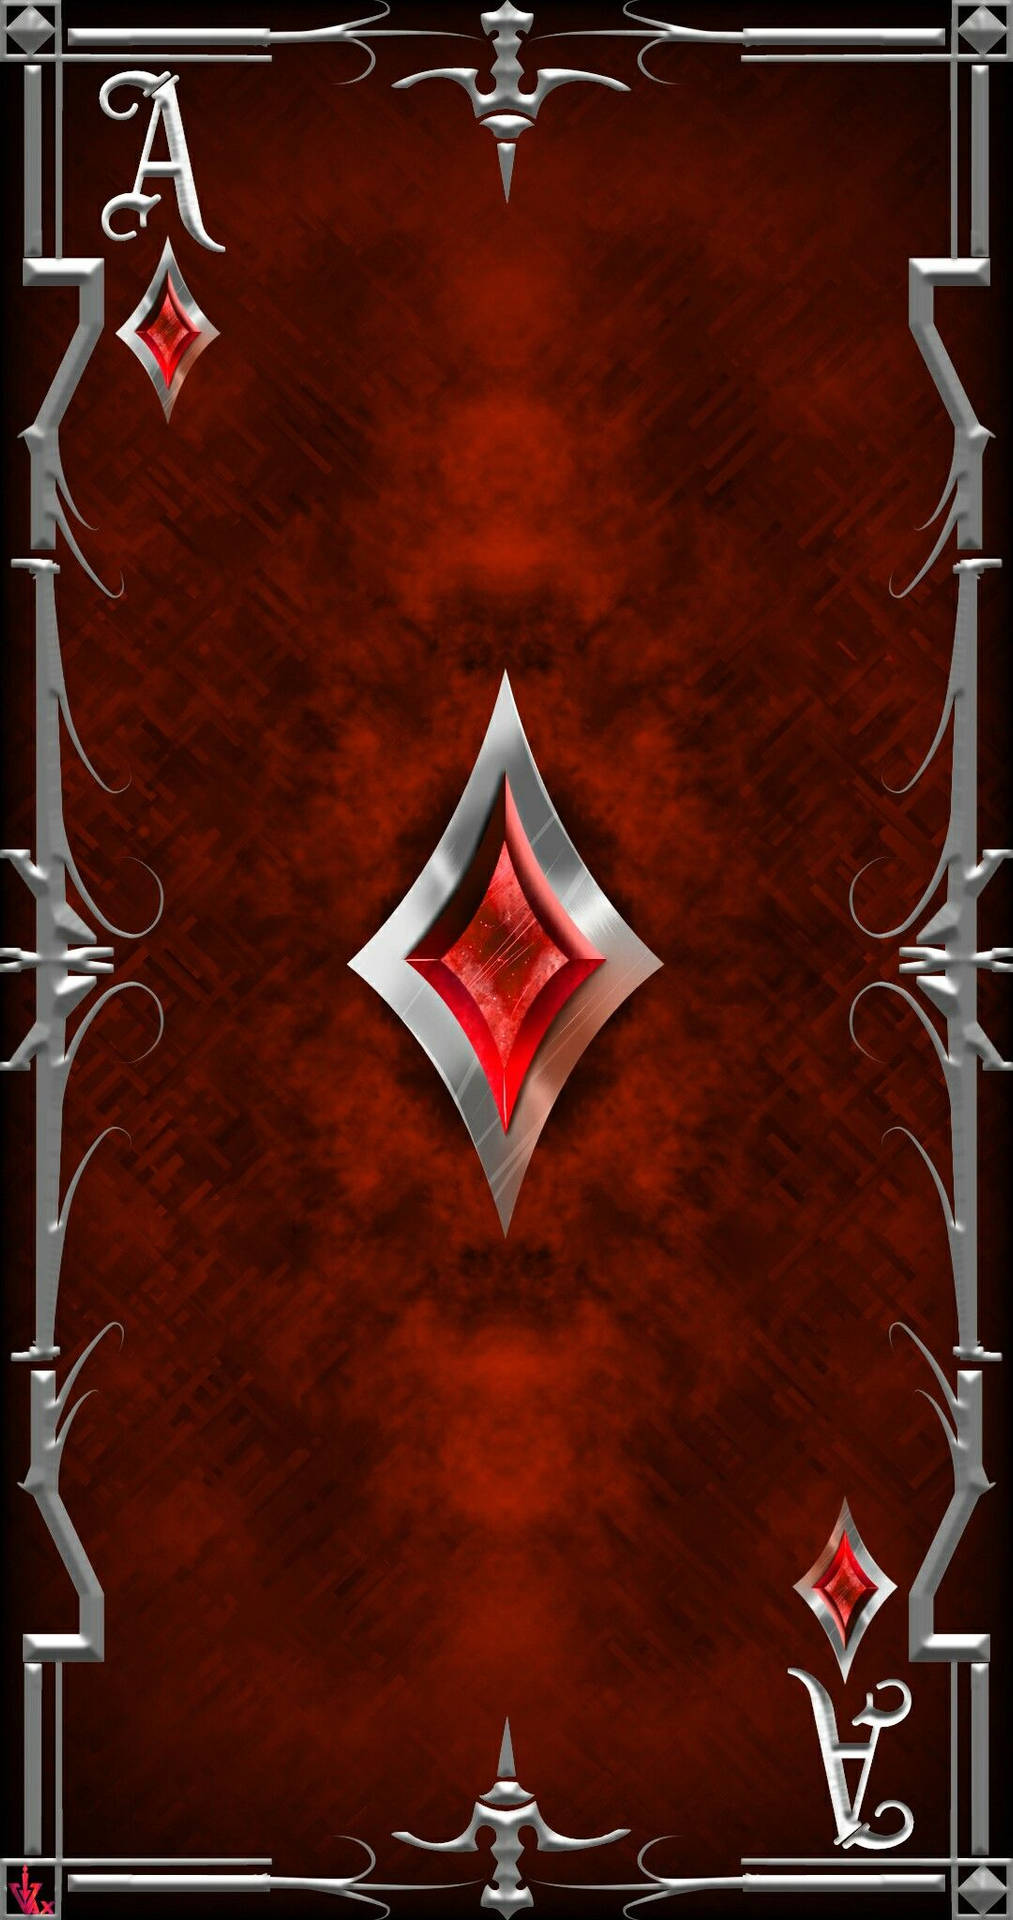 Ace Card Red Diamond Full-screen Design Mobile Wallpaper